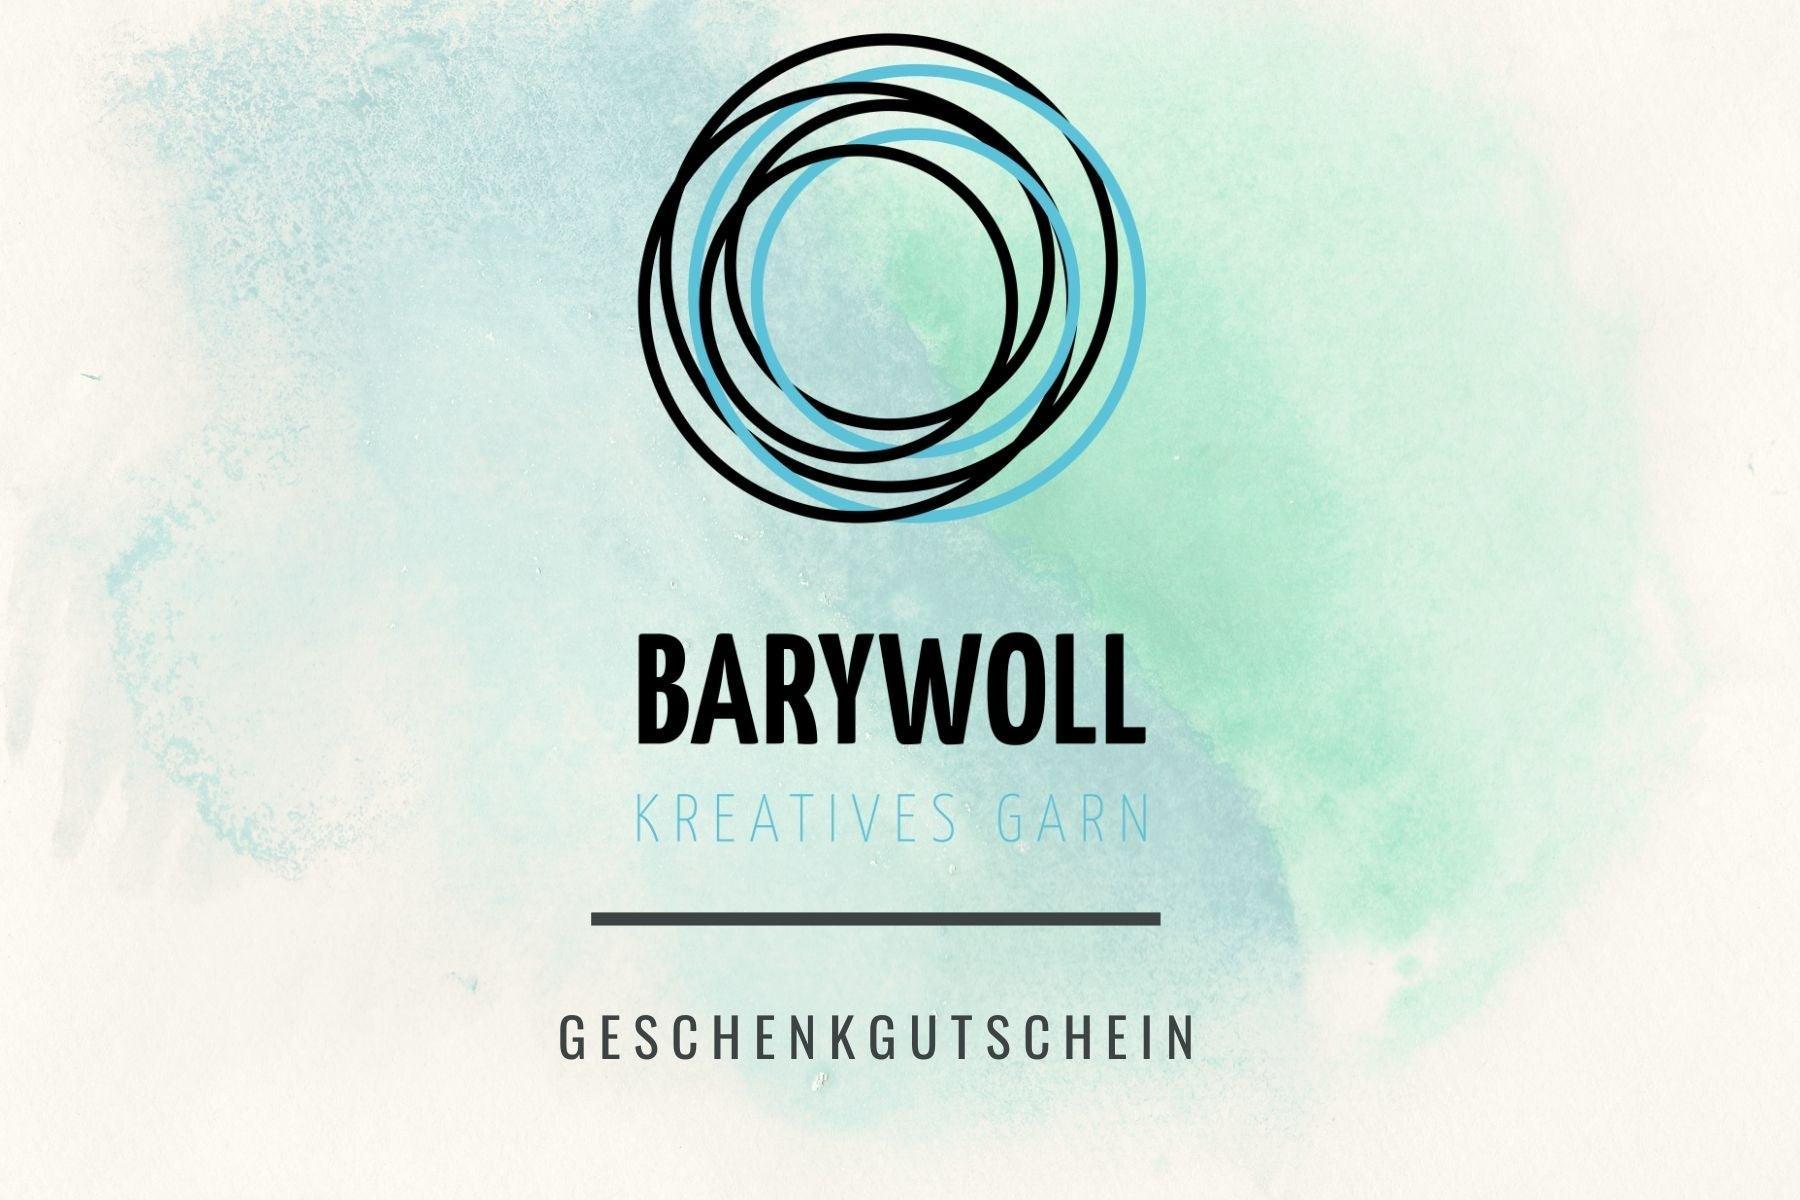 Geschenkgutschein - BaryWoll